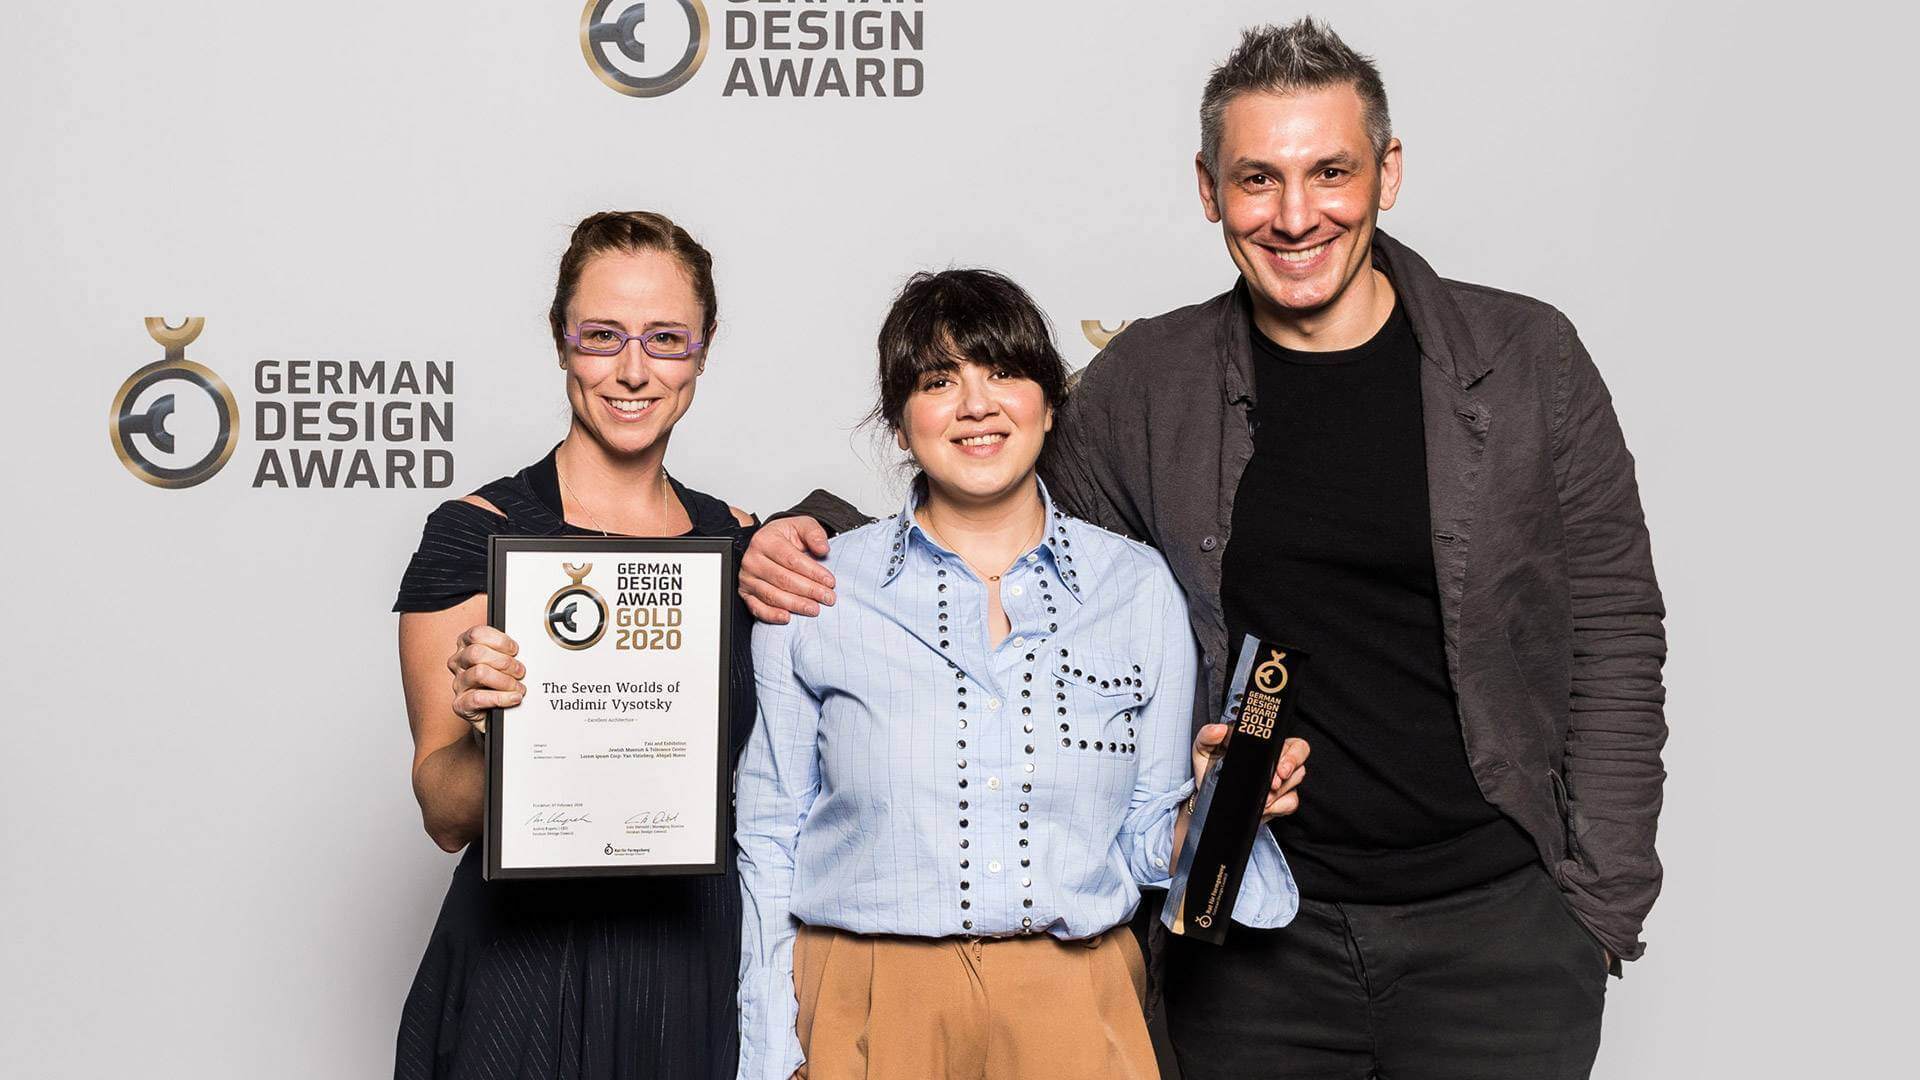 German Design Awards